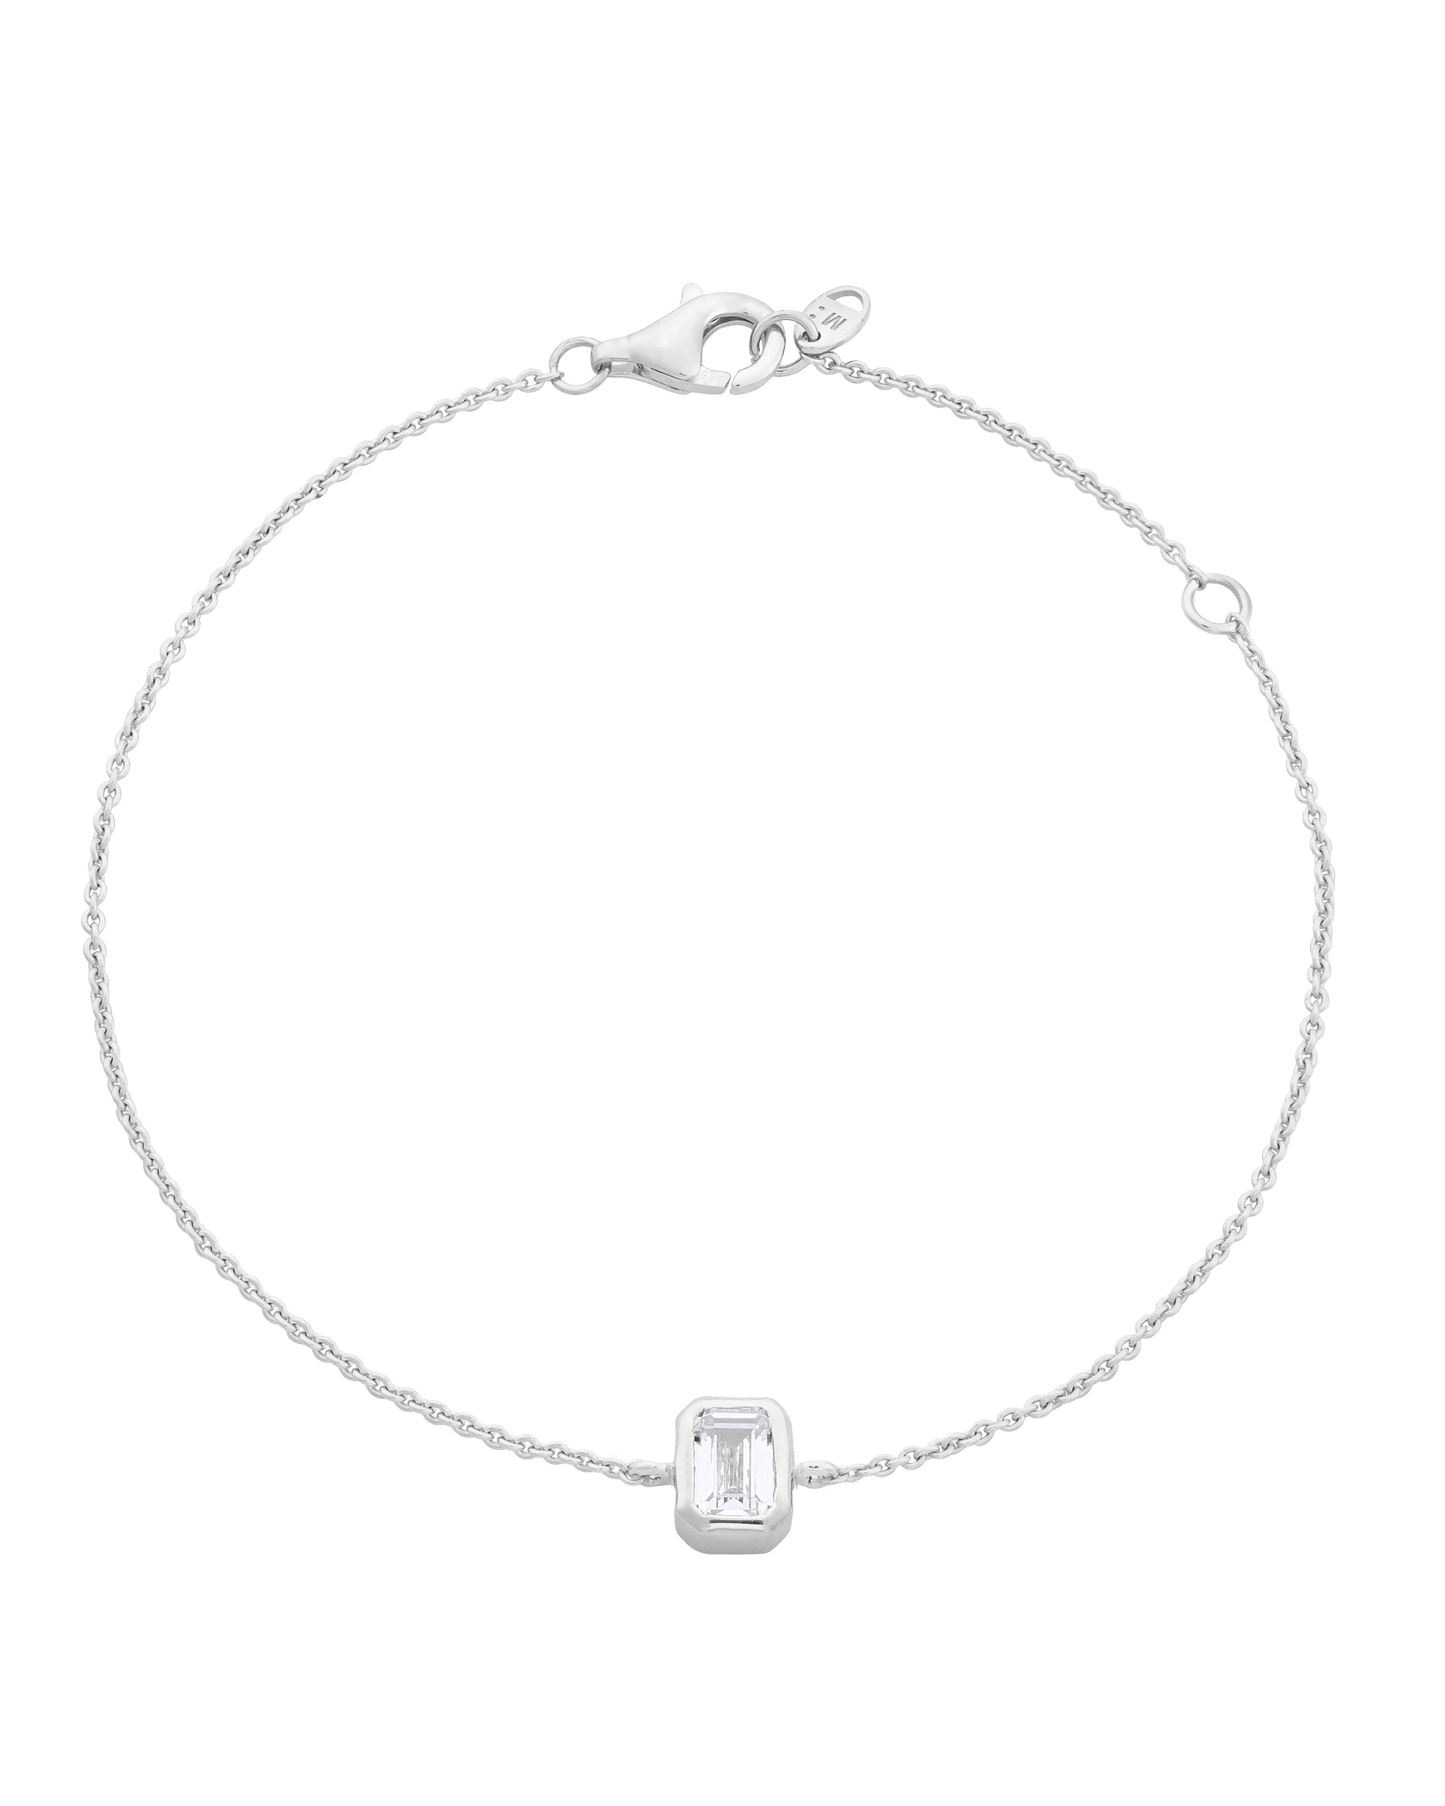 Emerald Solitaire Diamond Bracelet - 925 Sterling Silver Bracelets magal-dev 0.10 CT 6"+1“ extender 